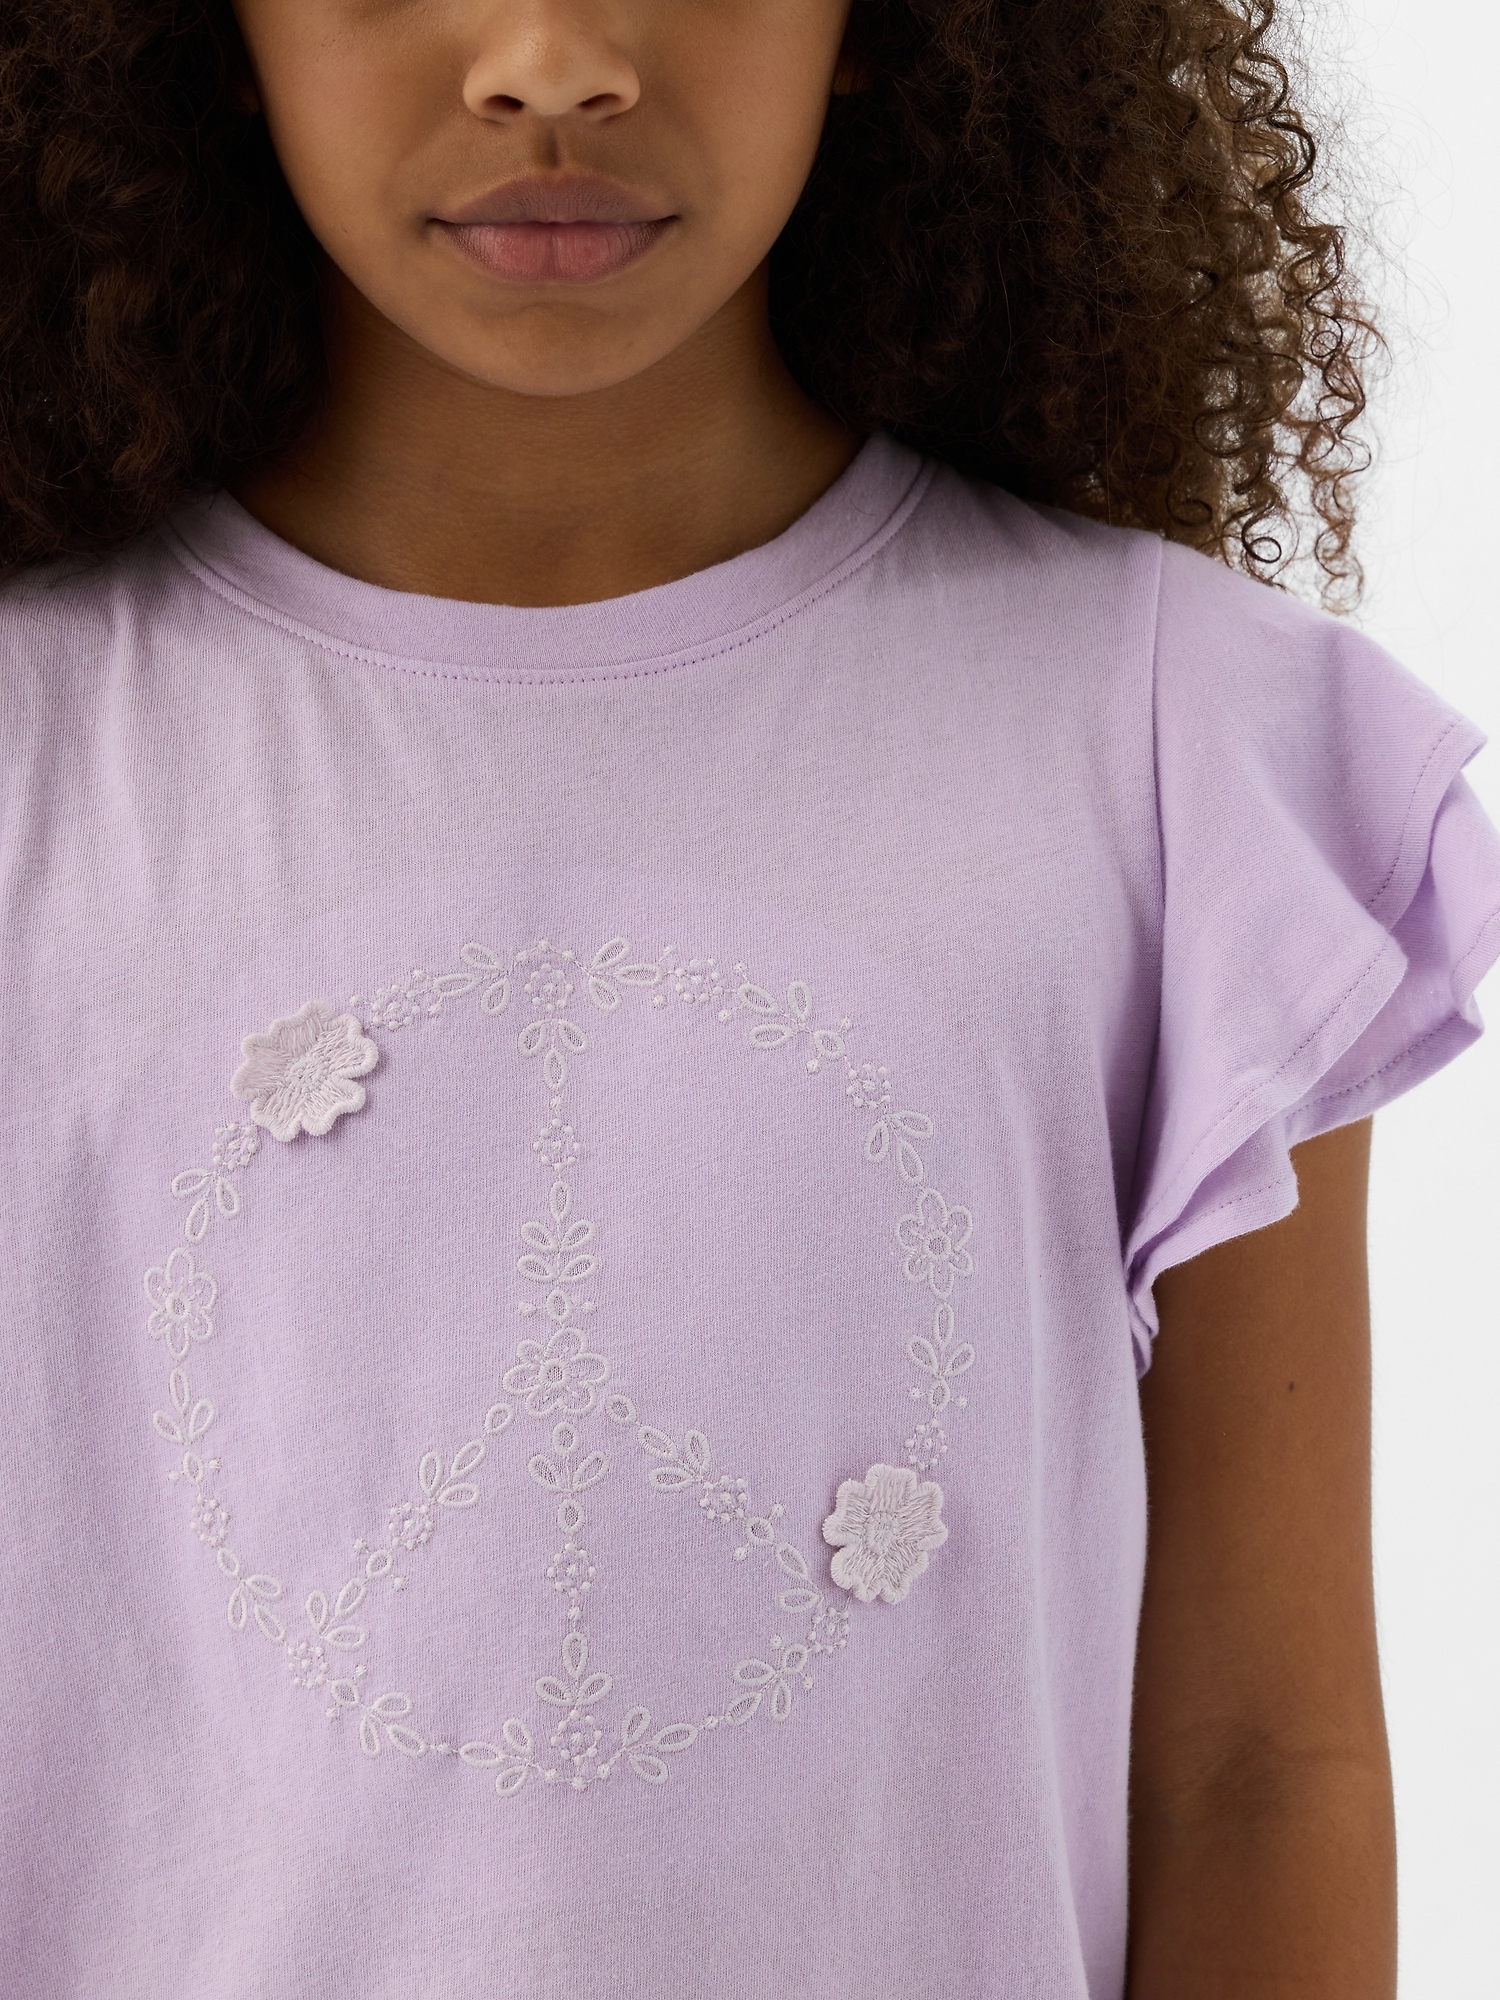 Kids Ruffle Graphic T-Shirt | Gap